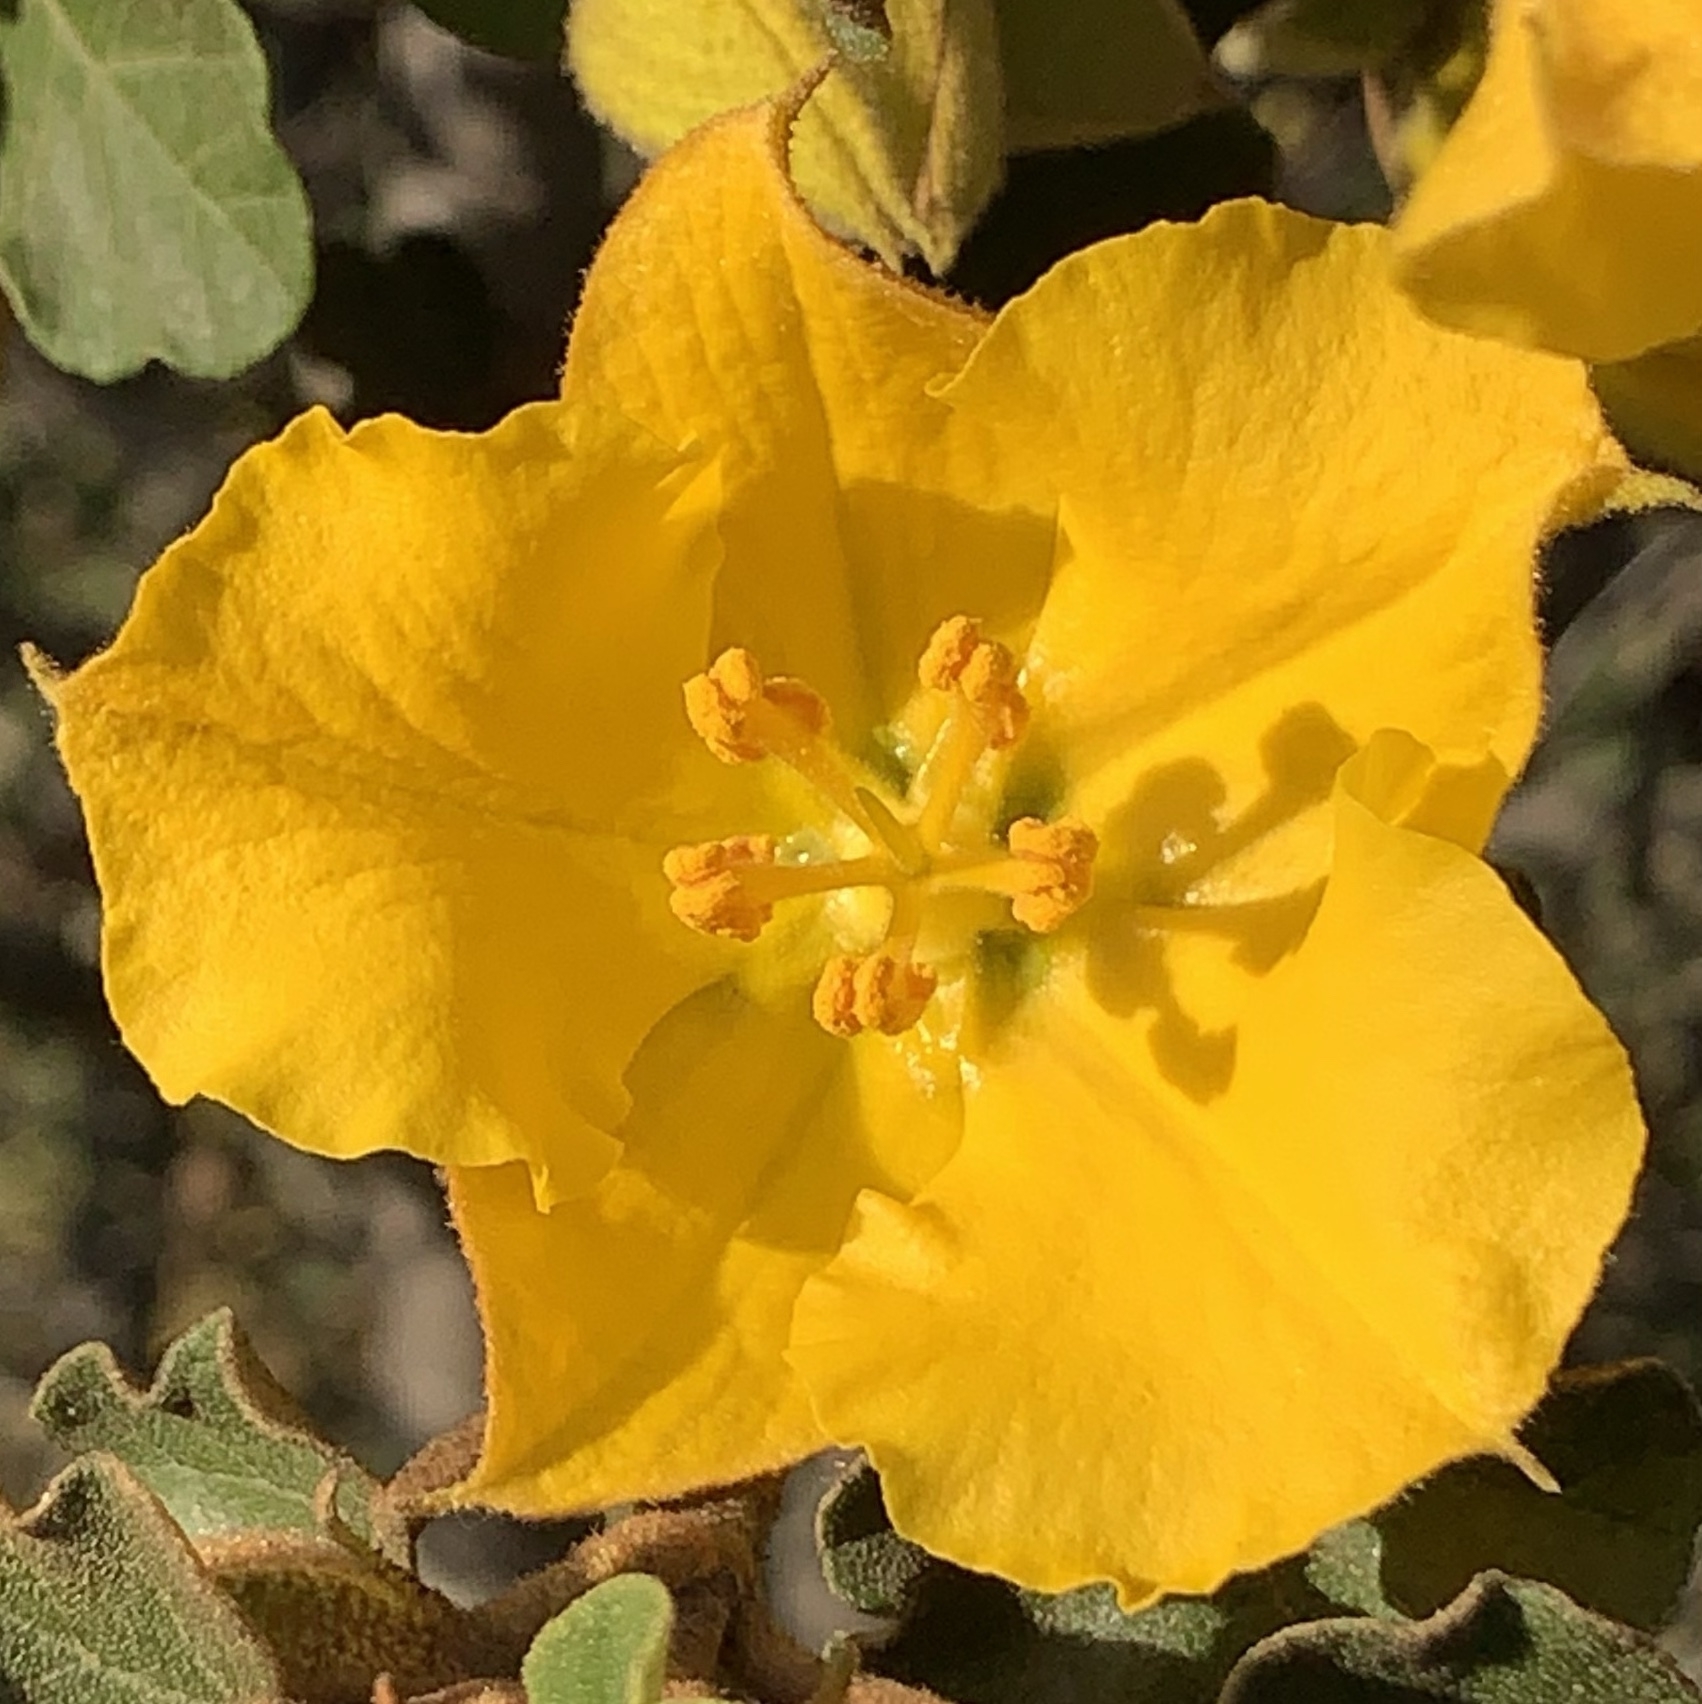 upclose of a golden yellow flower